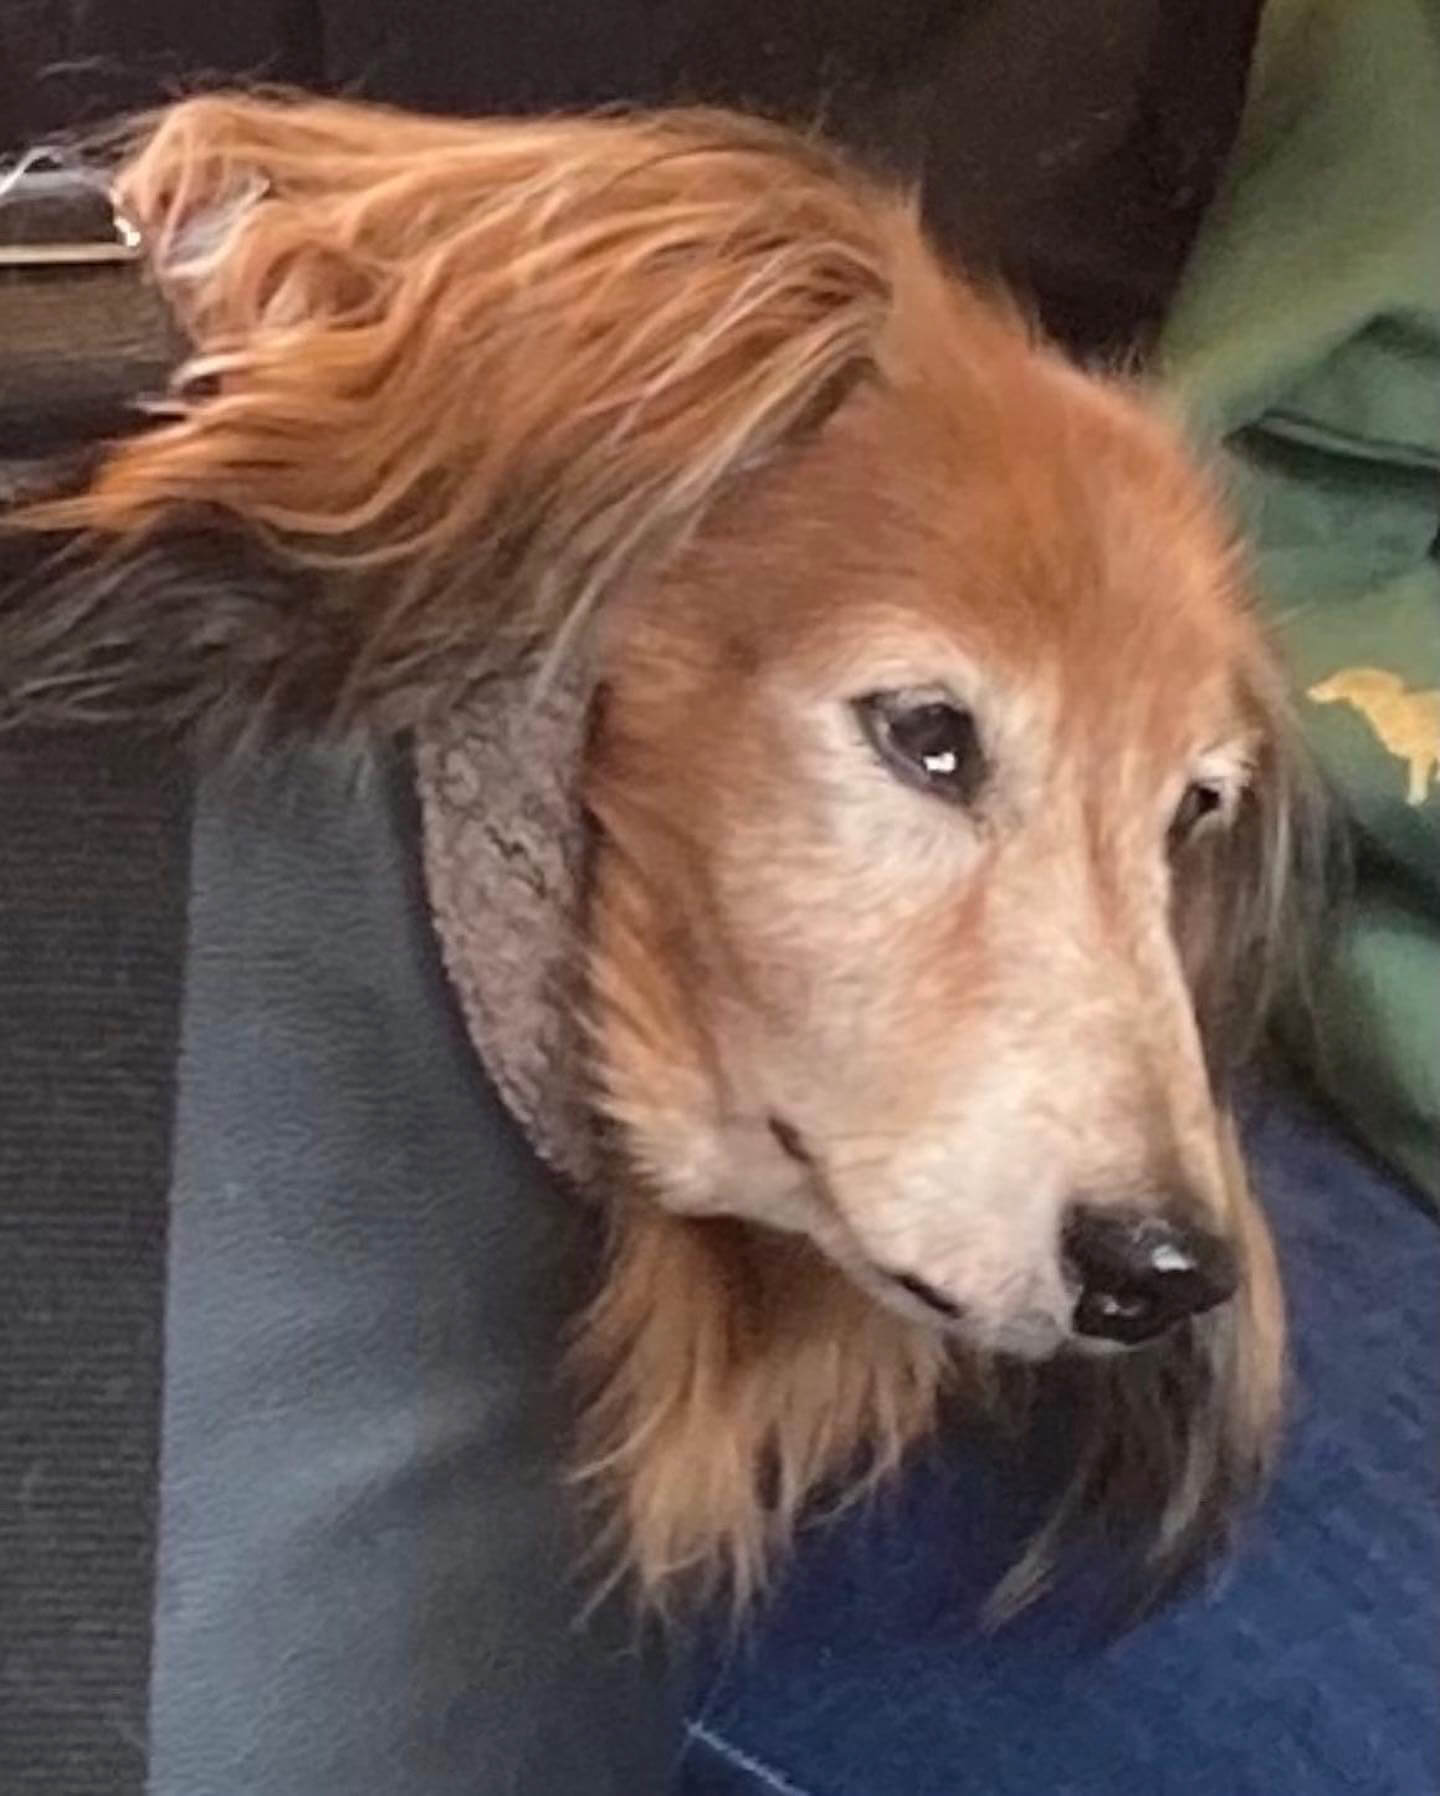 a miserable dachshund in a bag.